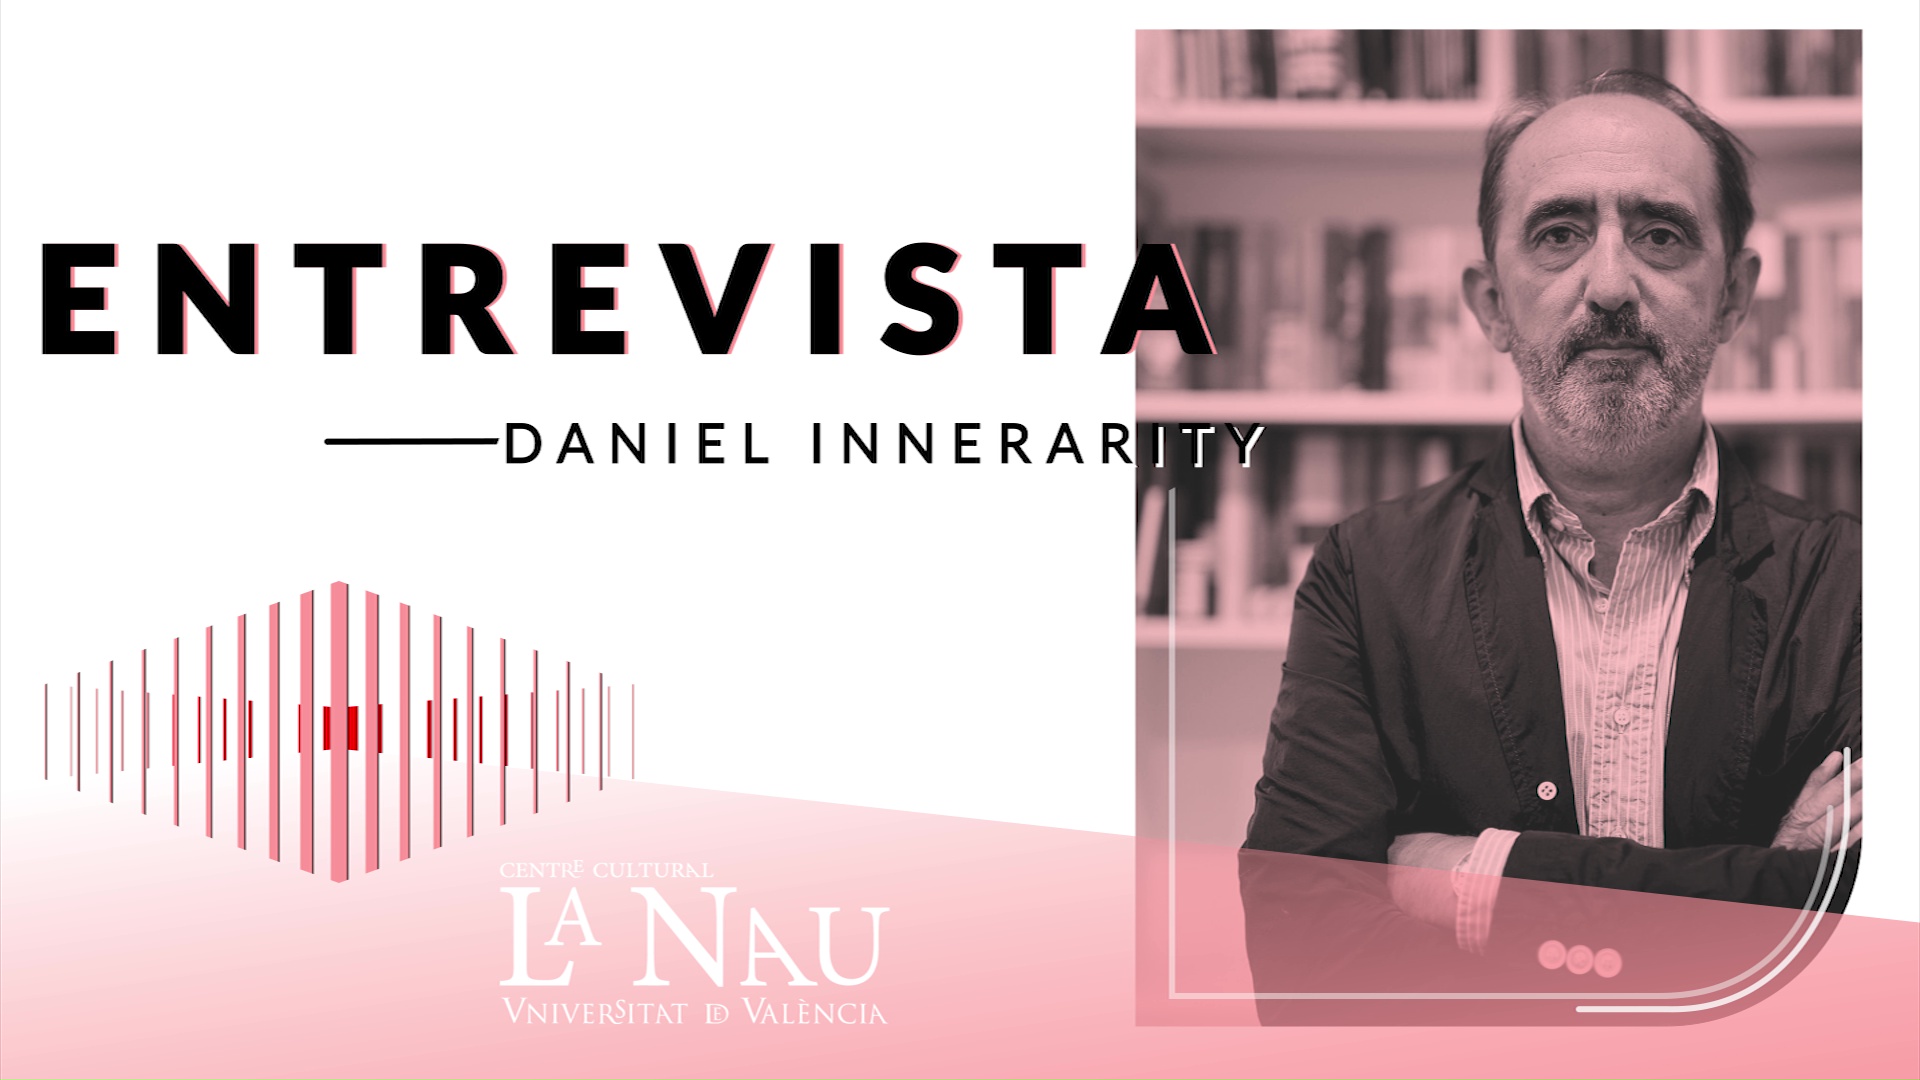 Entrevista a La Nau. Daniel Innerarity